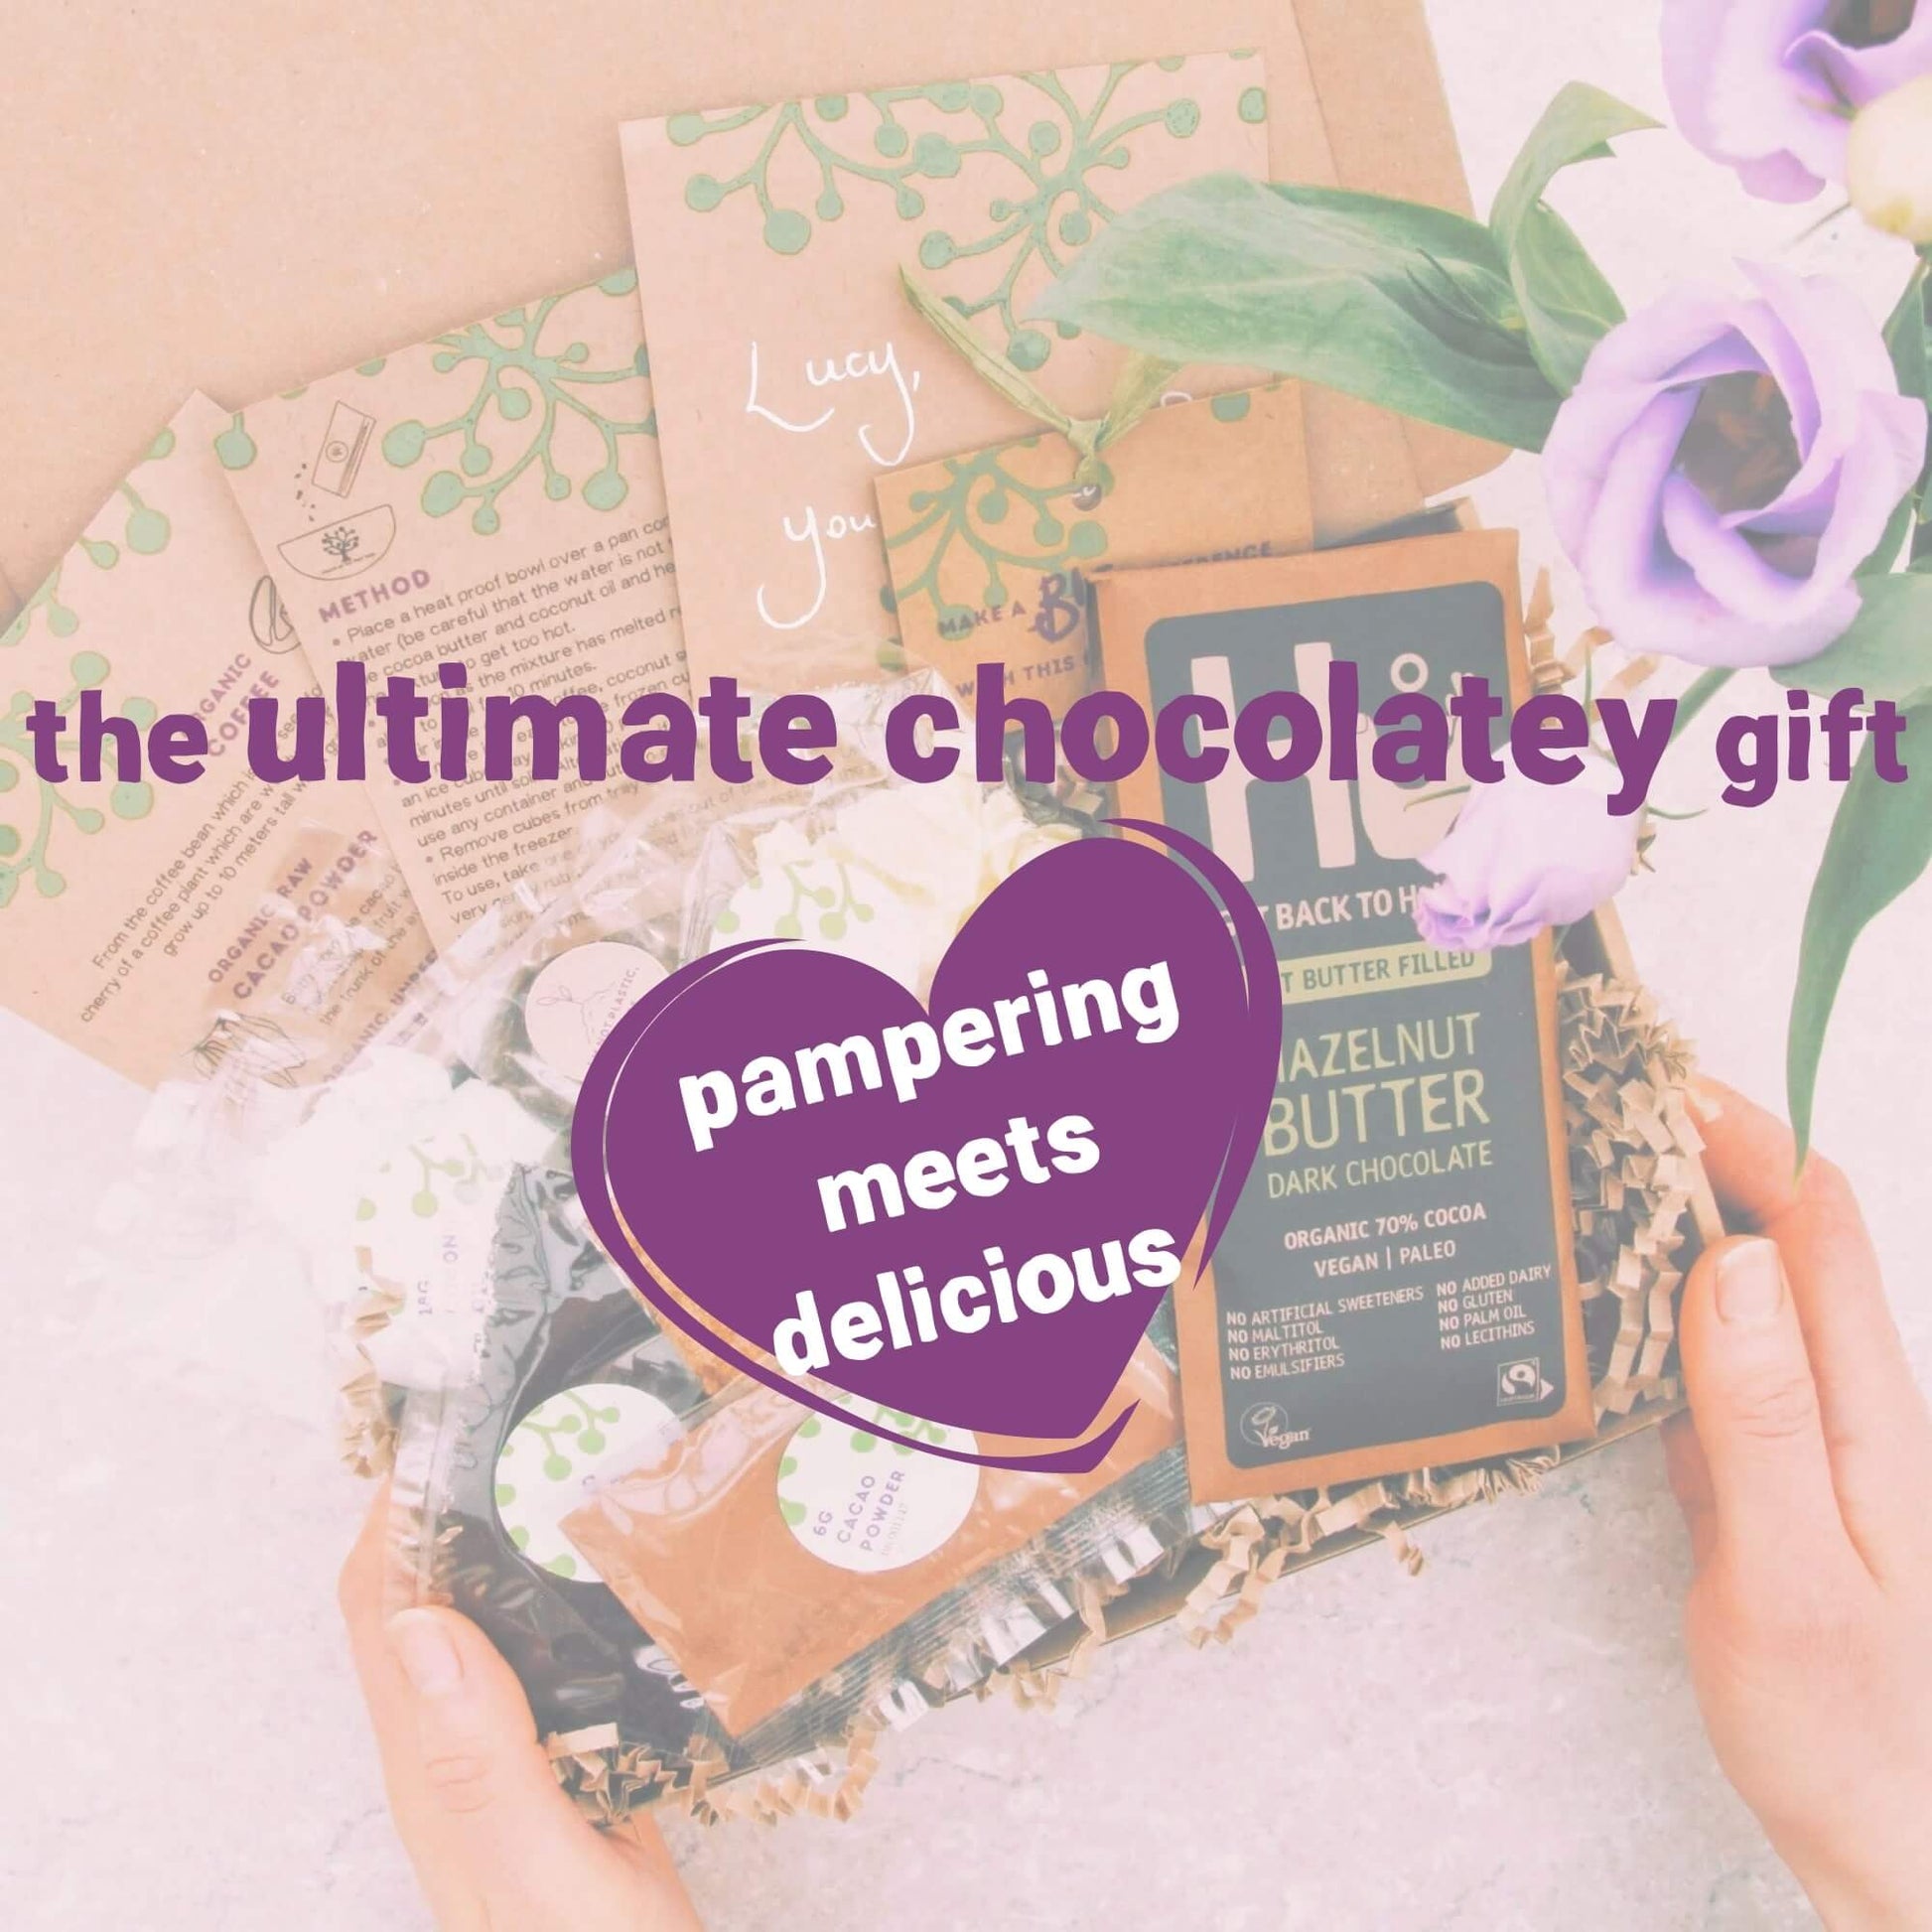 pamper kit and chocolate inside 21st birthday gift box